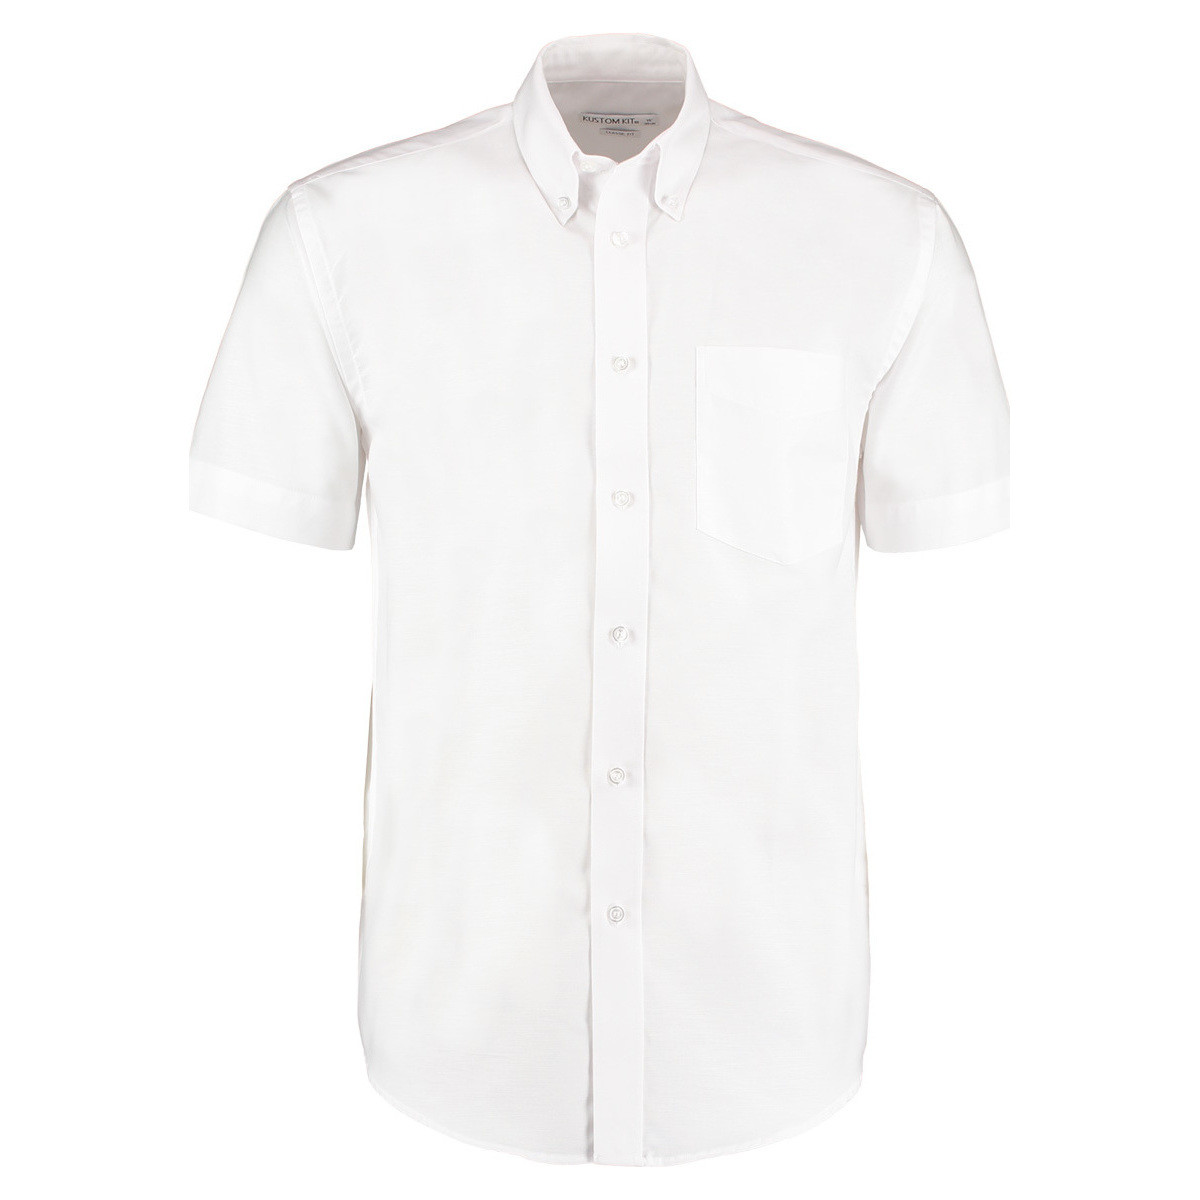 textil Hombre Camisas manga corta Kustom Kit KK350 Blanco